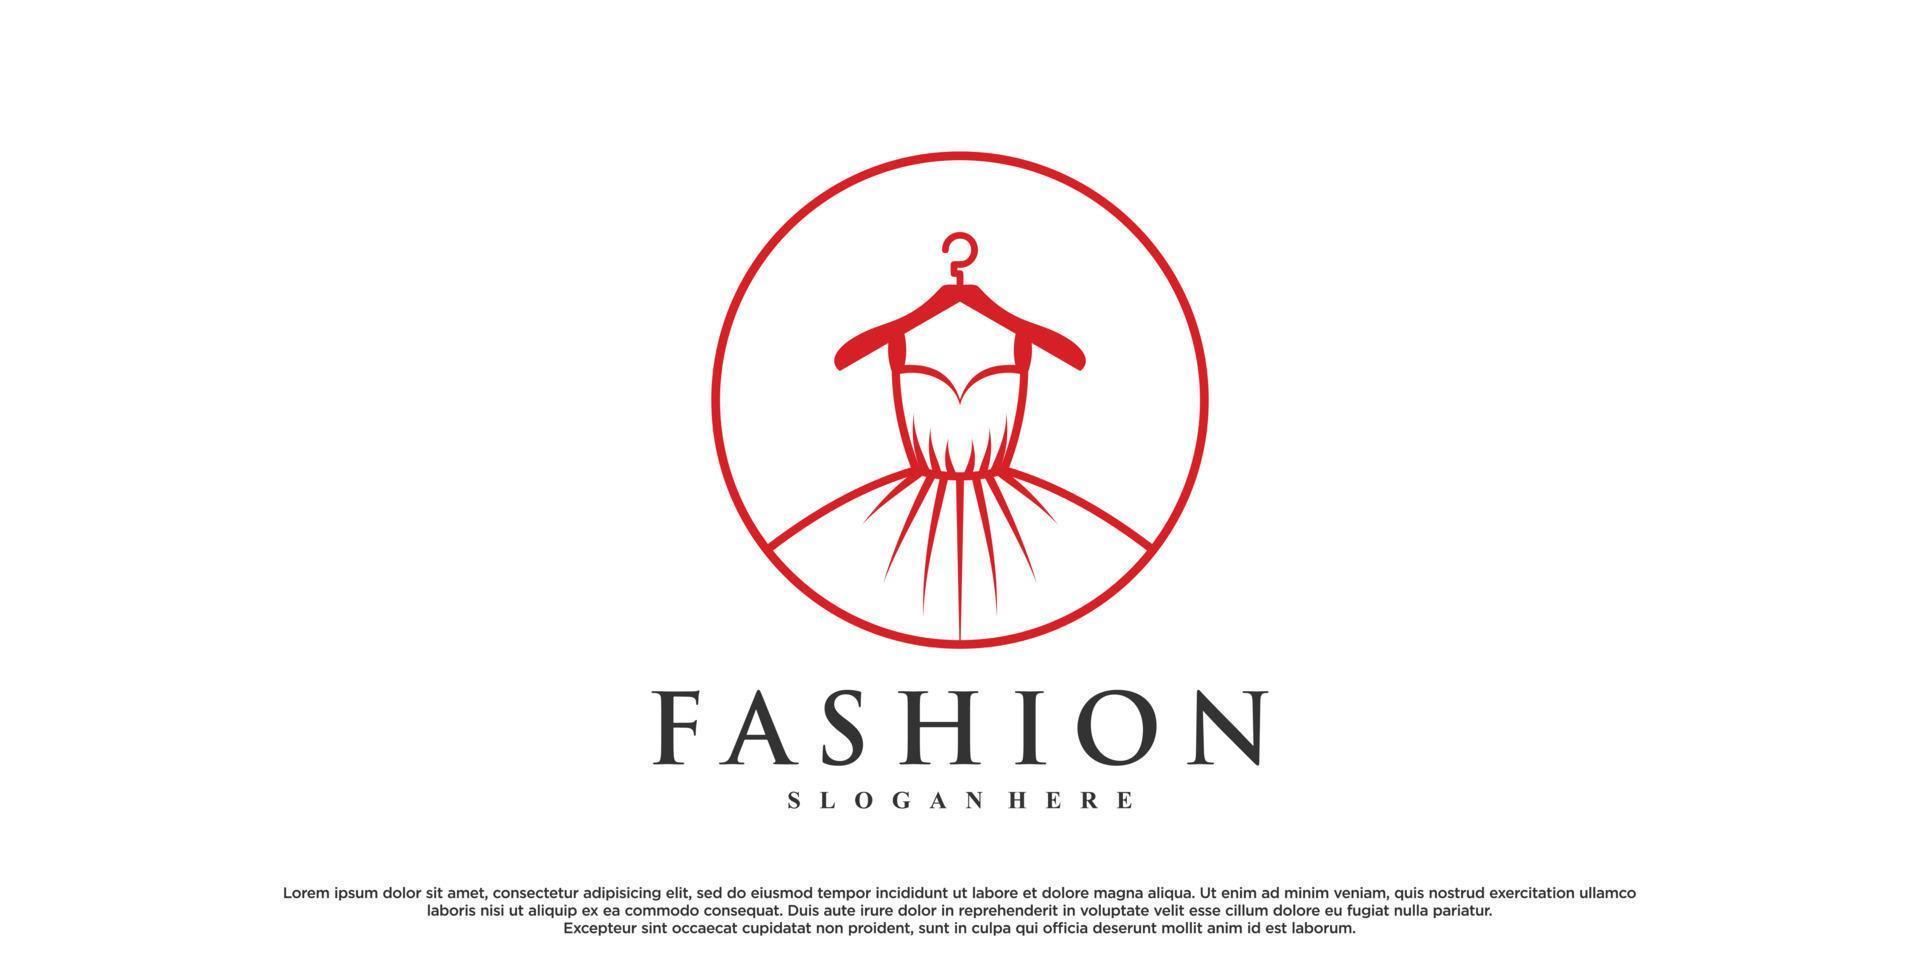 Fashion logo design with dress fashion Premium Vector 11775263 Vector ...